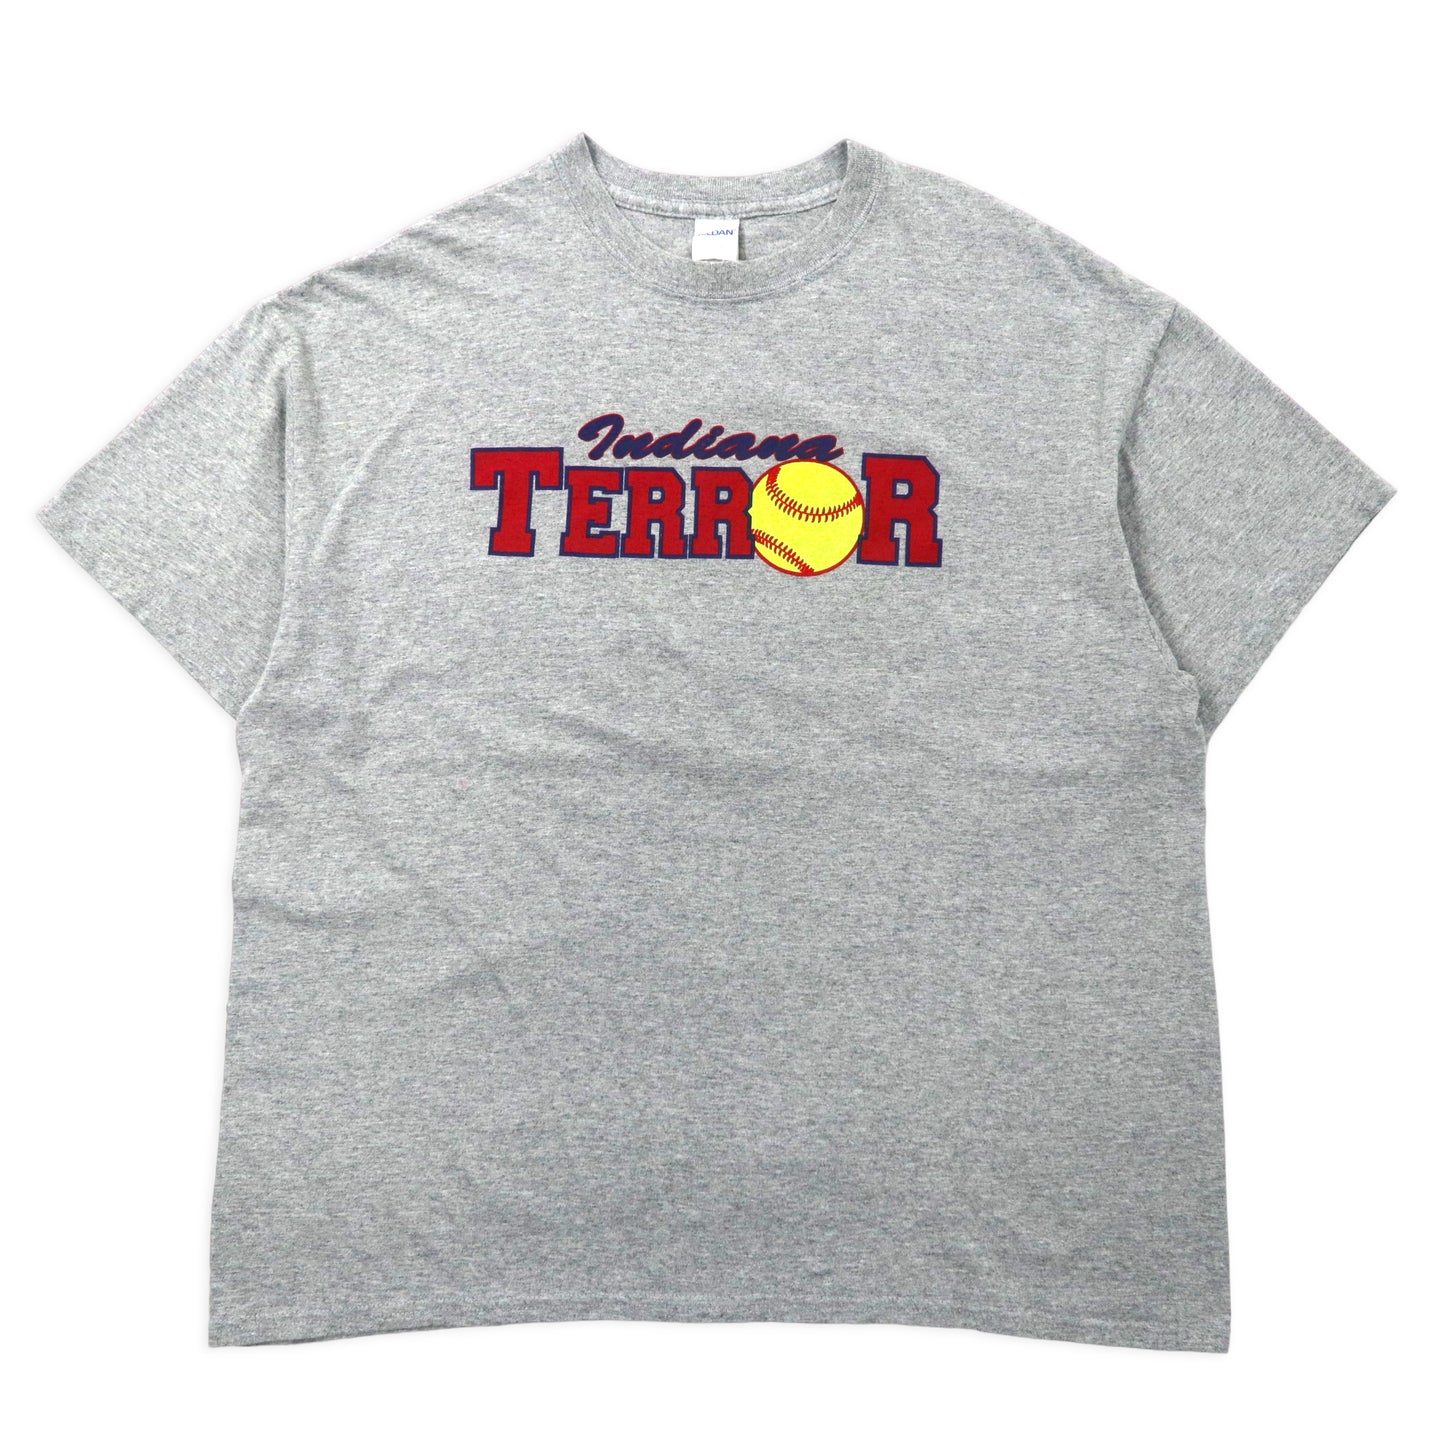 GILDAN Baseball Print T-Shirt XL Gray Cotton Indiana Terror ...